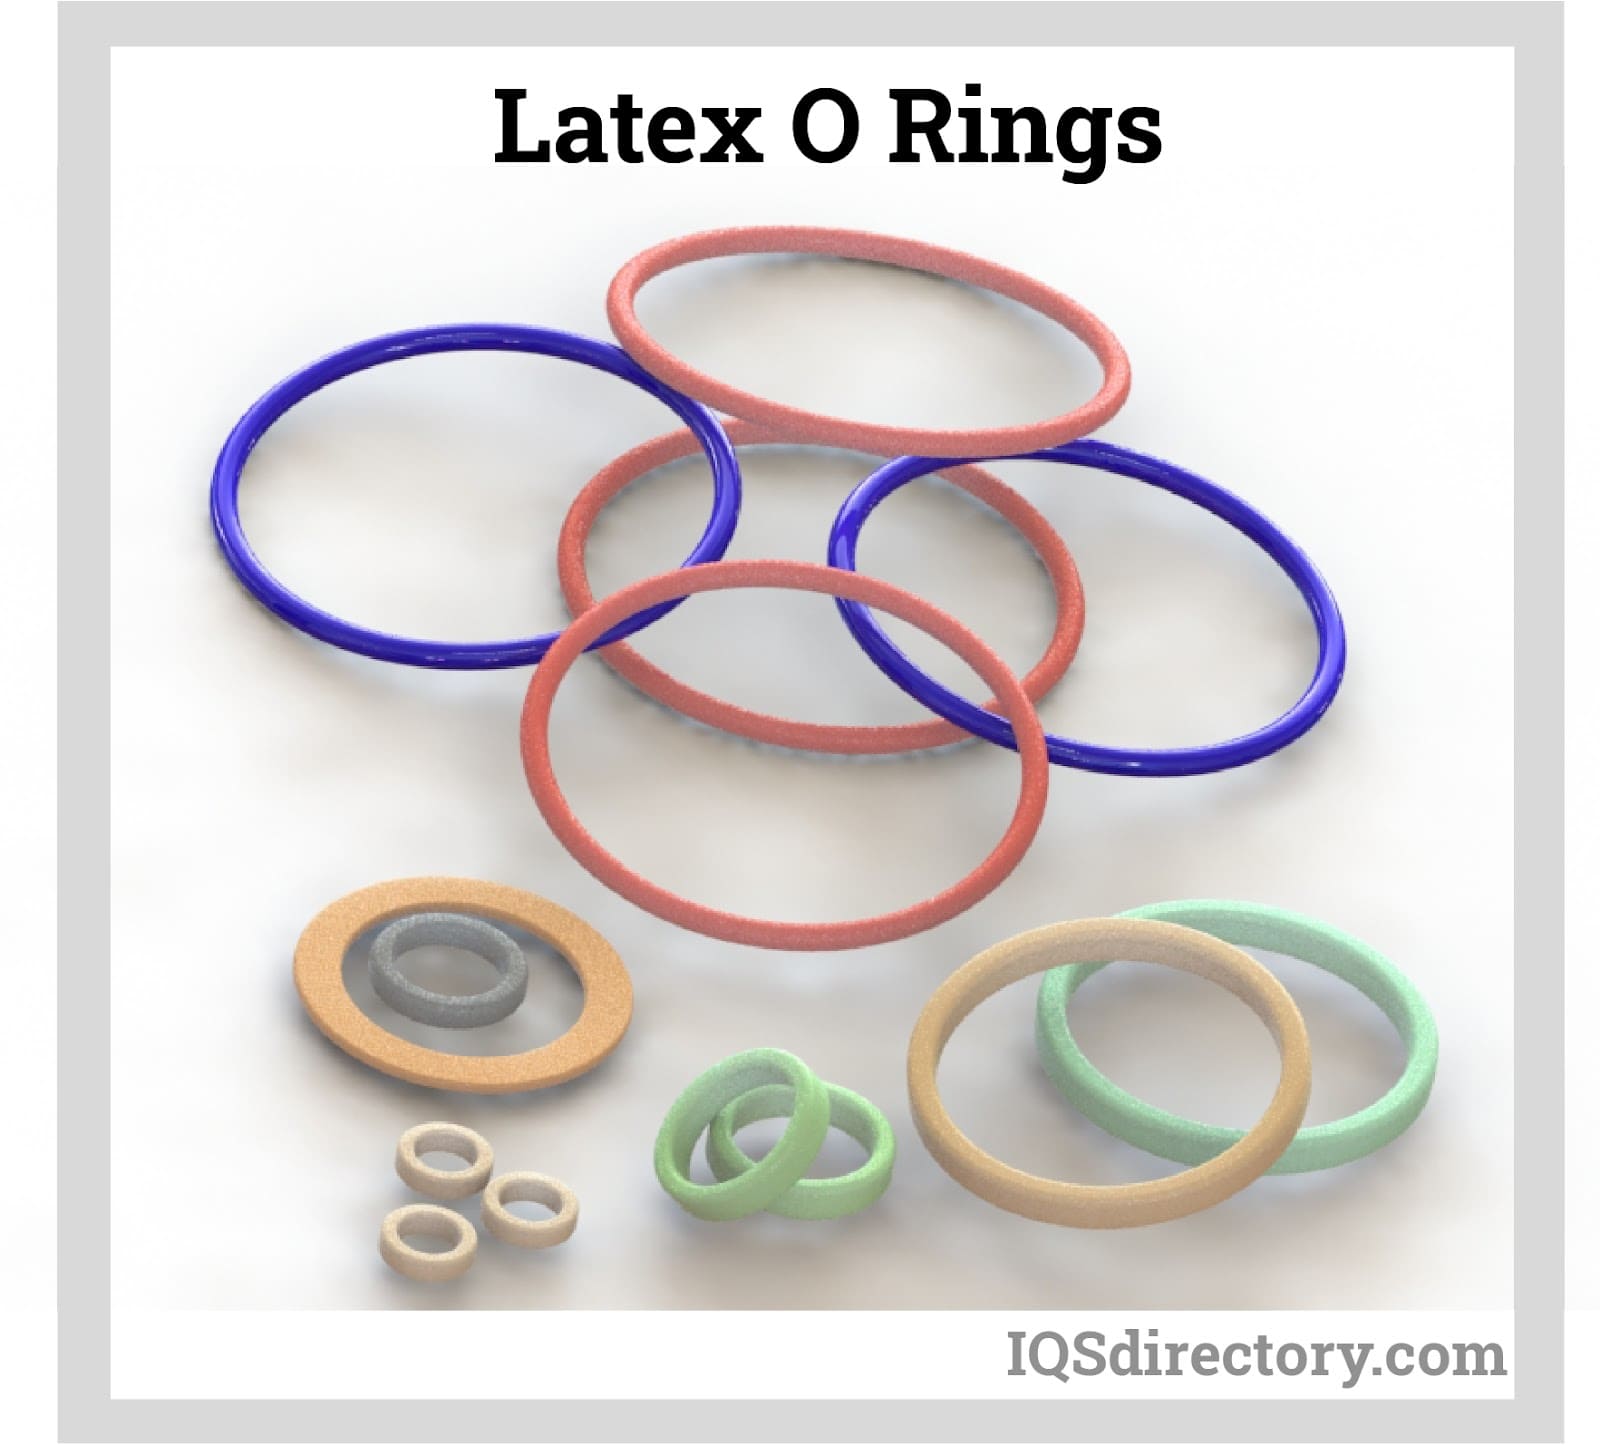 Latex O Rings